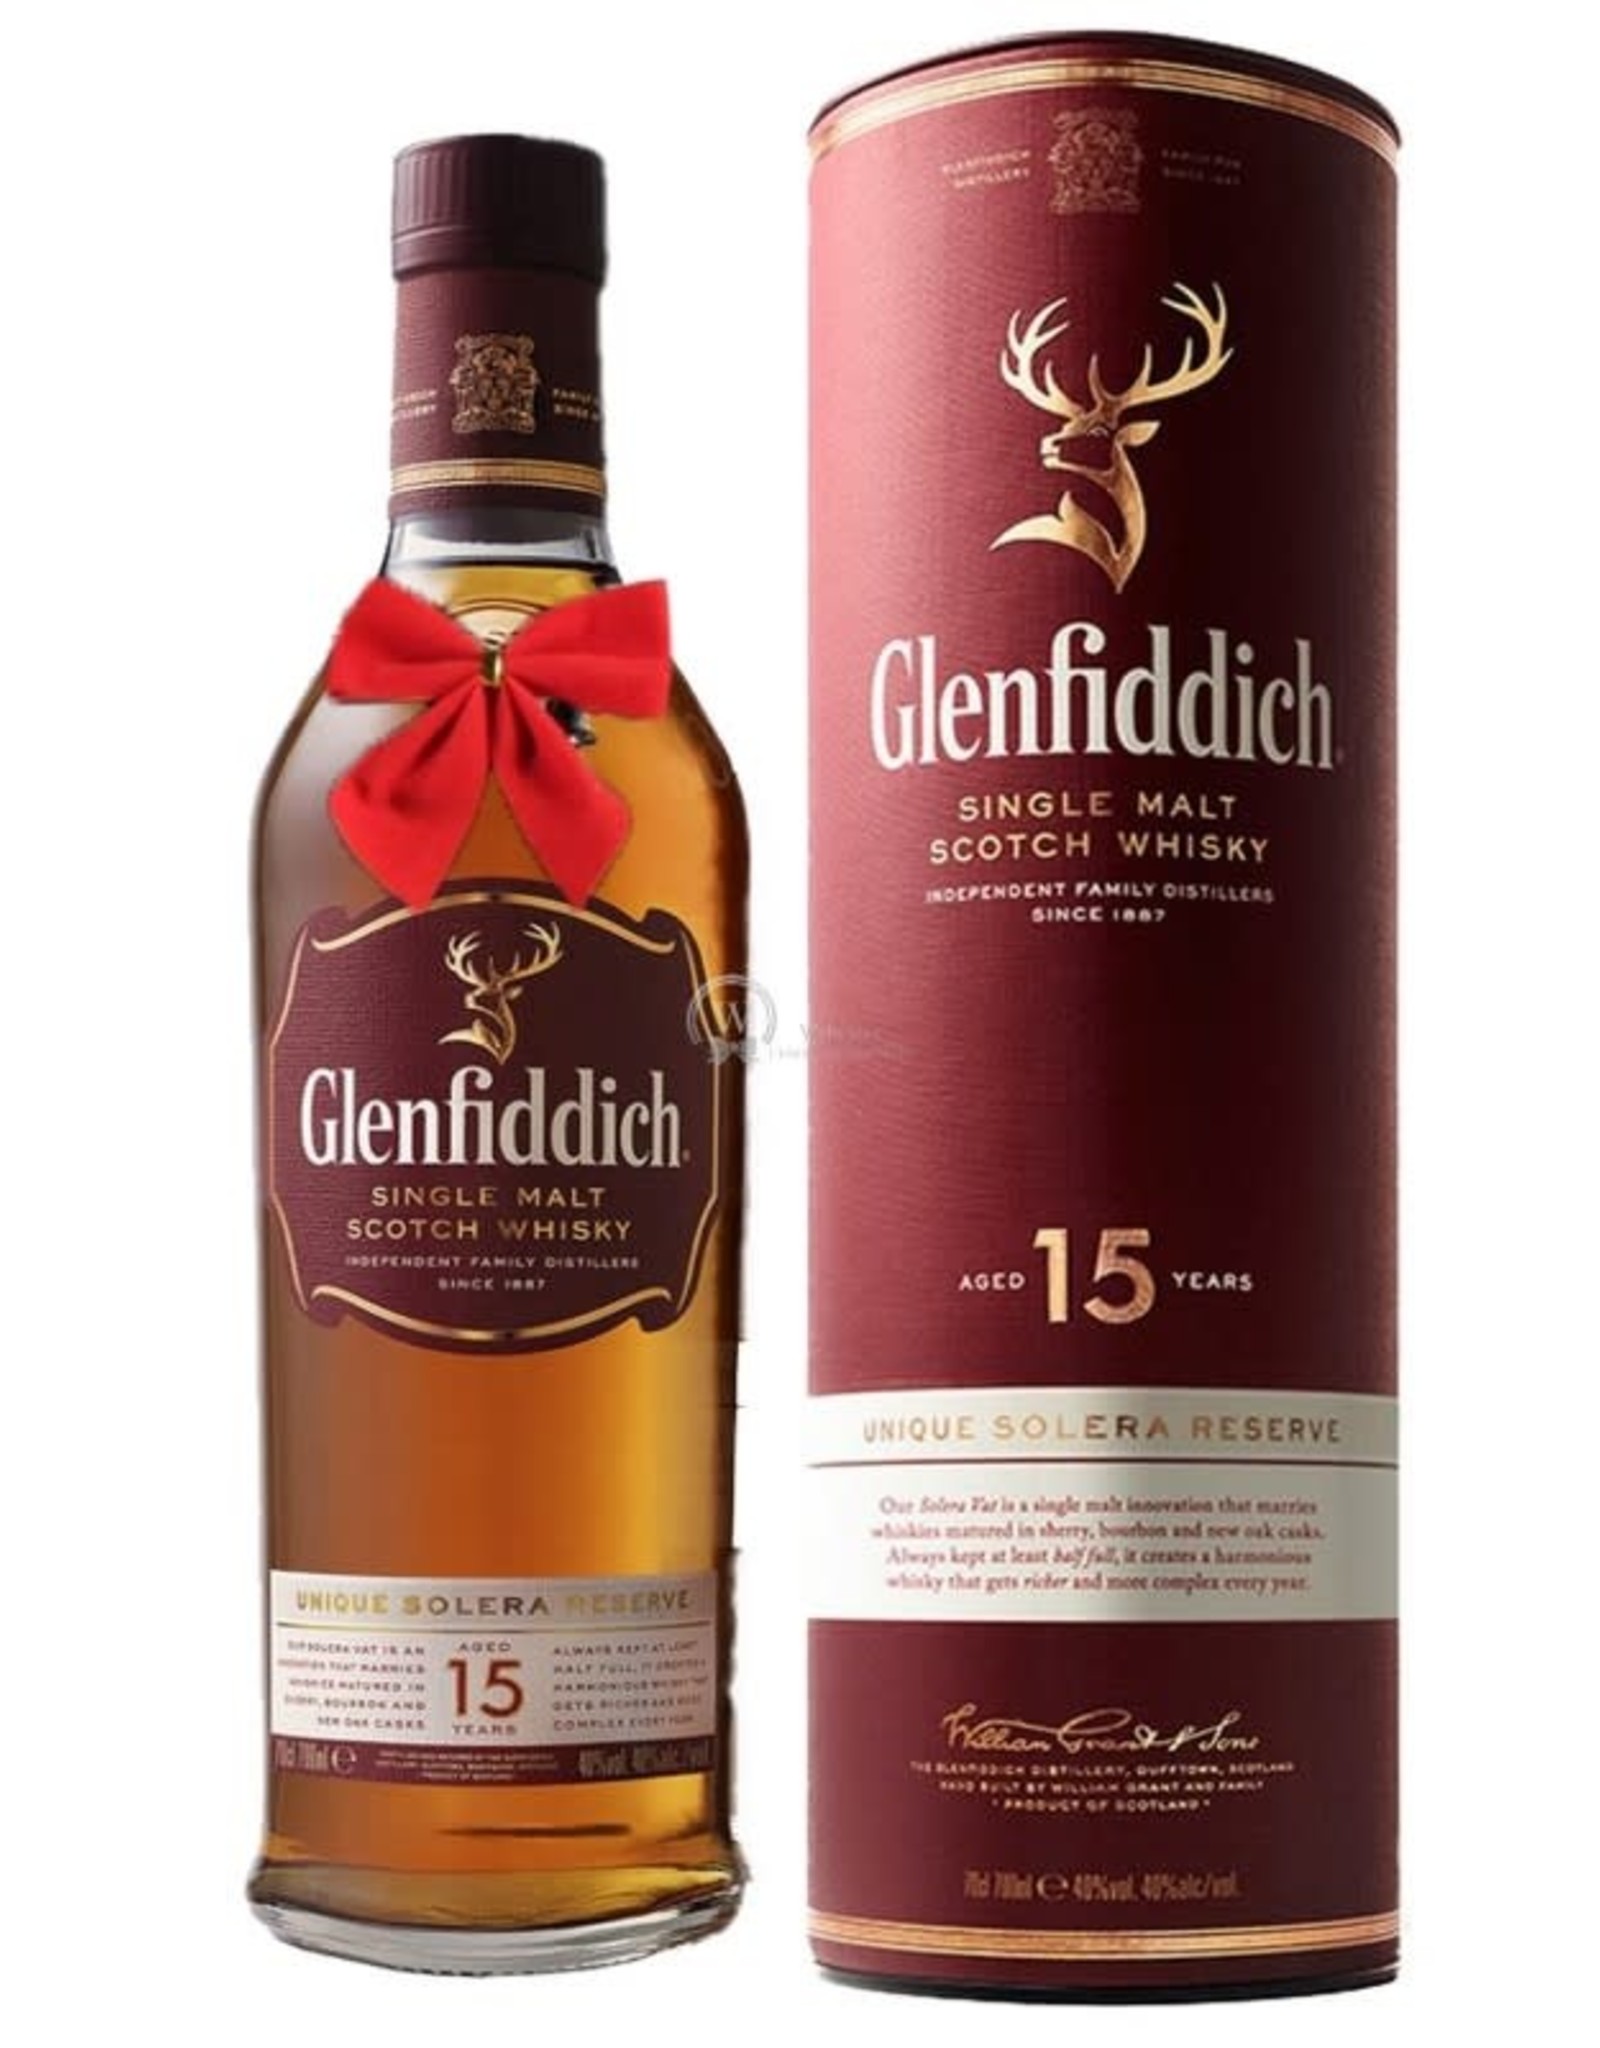 Glenfiddich Glenfiddich Aged 15 Years Unique Solera Reserve 750 ml